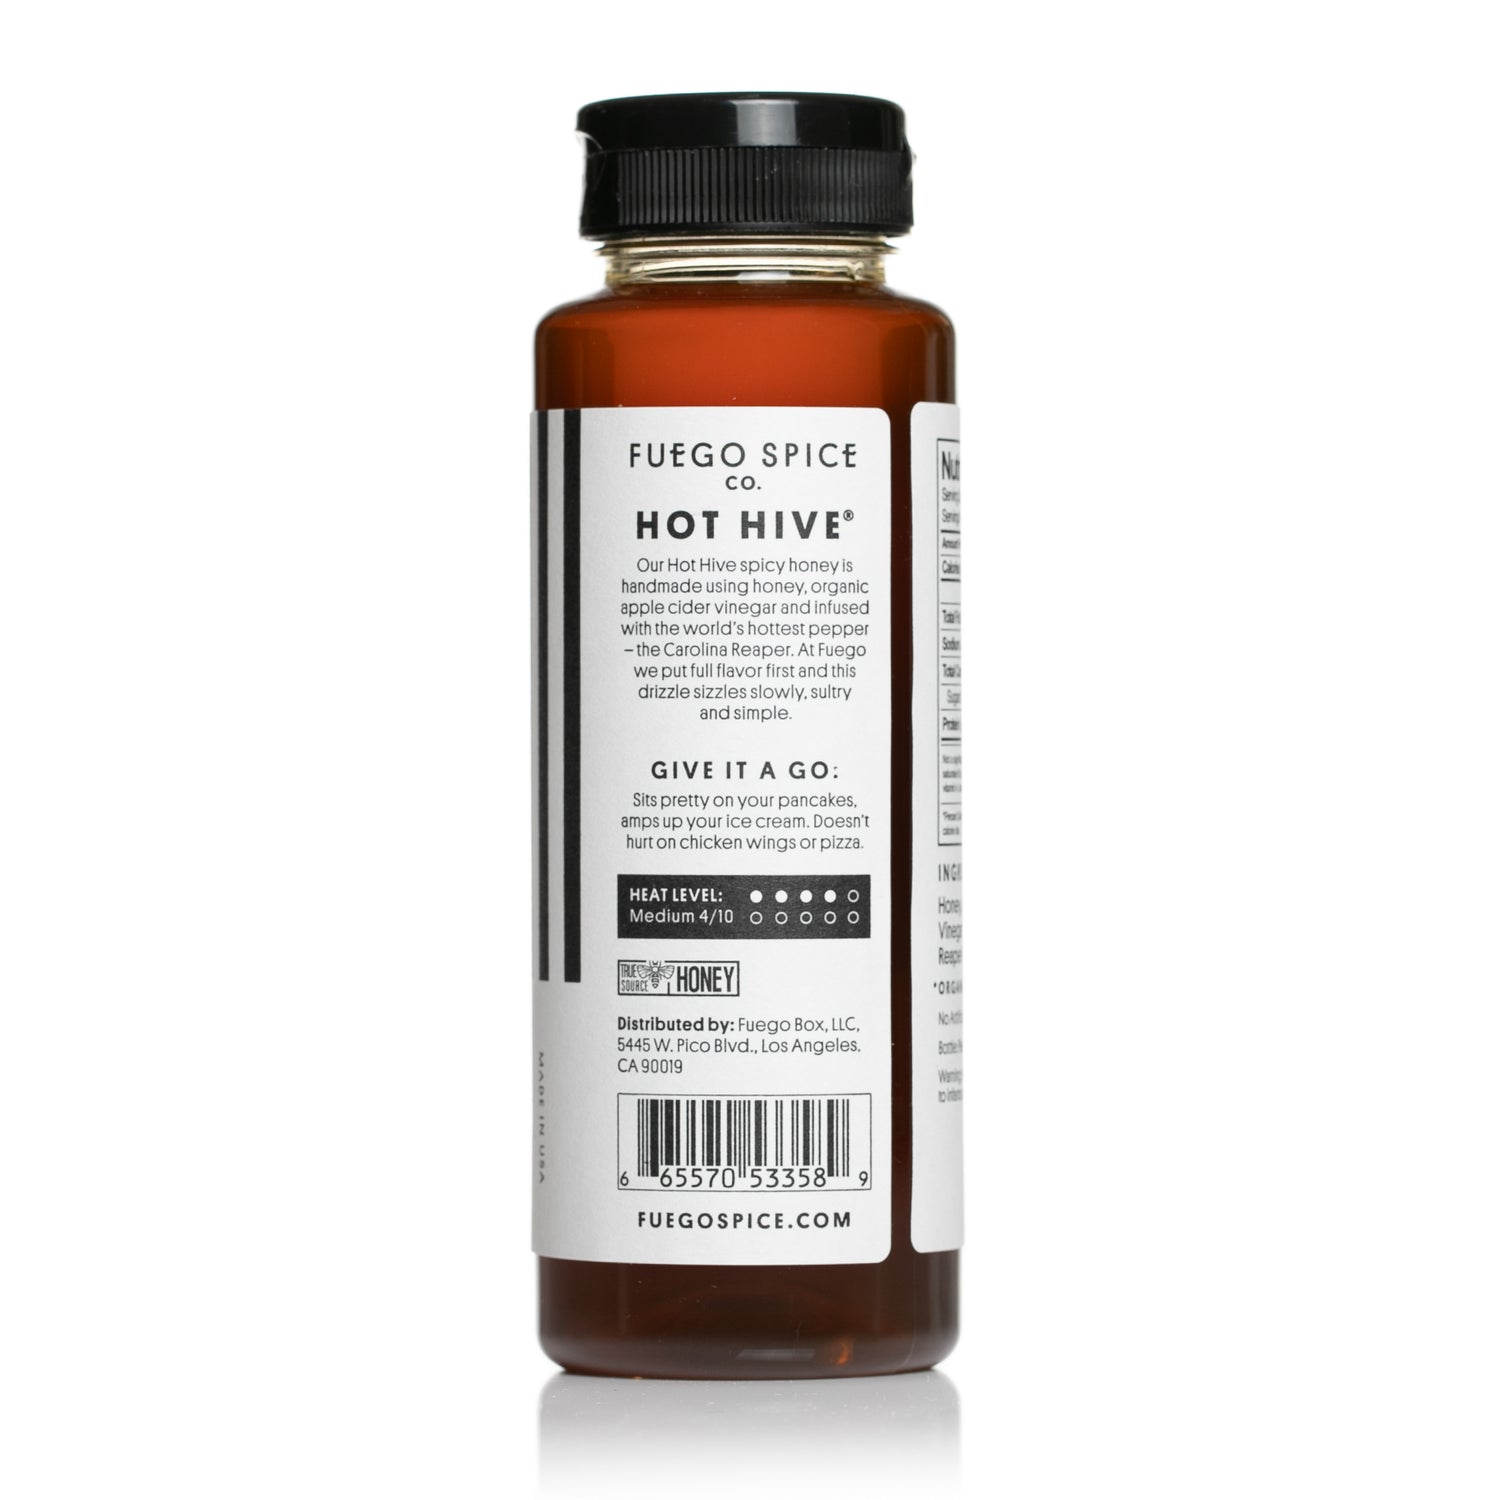 HOT HIVE Spicy Honey with Organic Carolina Reaper Pepper